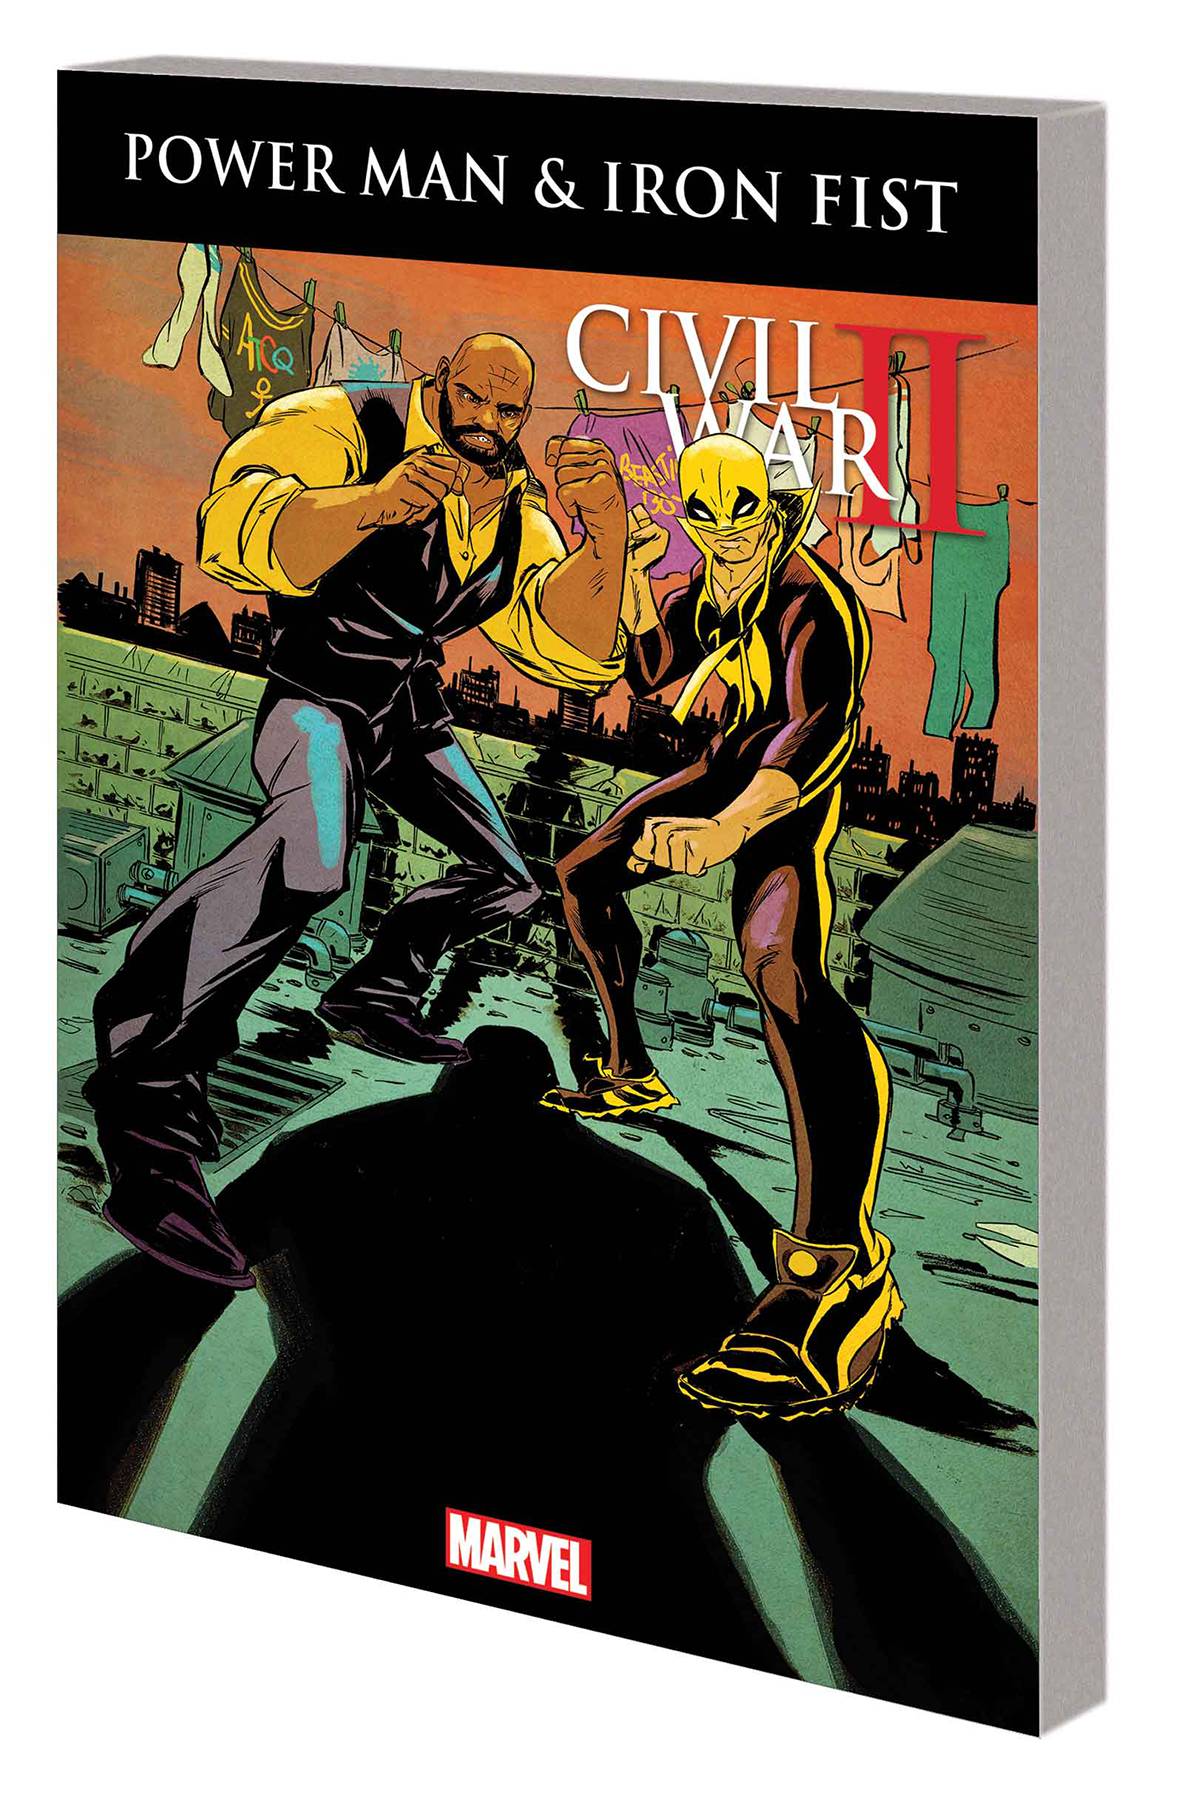 Power Man And Iron Fist Graphic Novel Volume 2 Civil War II